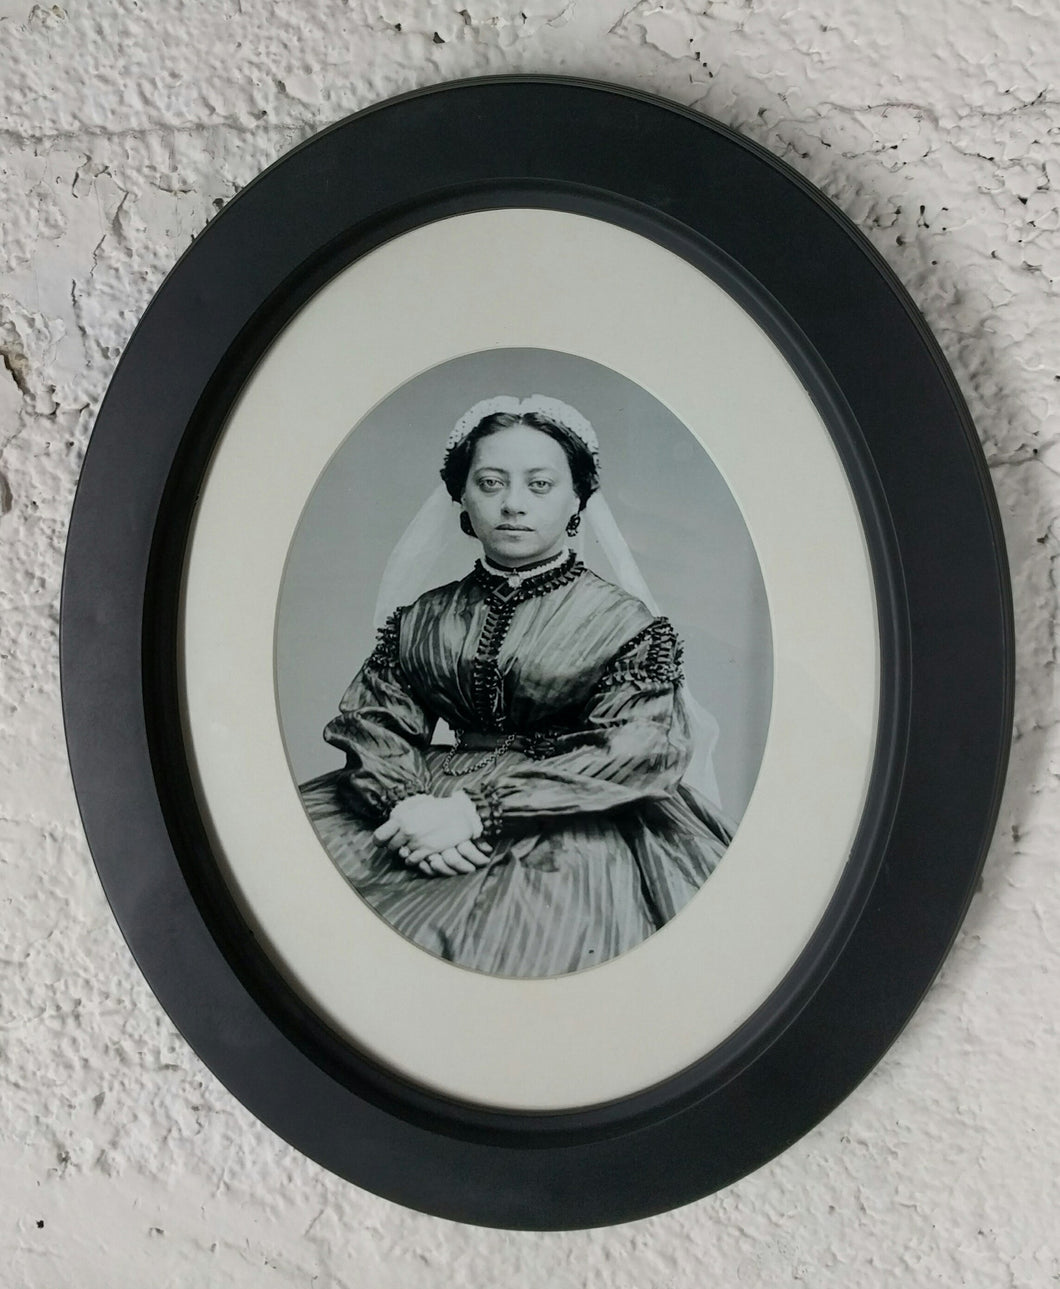 3028 Round Black and White Photo of Woman Victorian Era